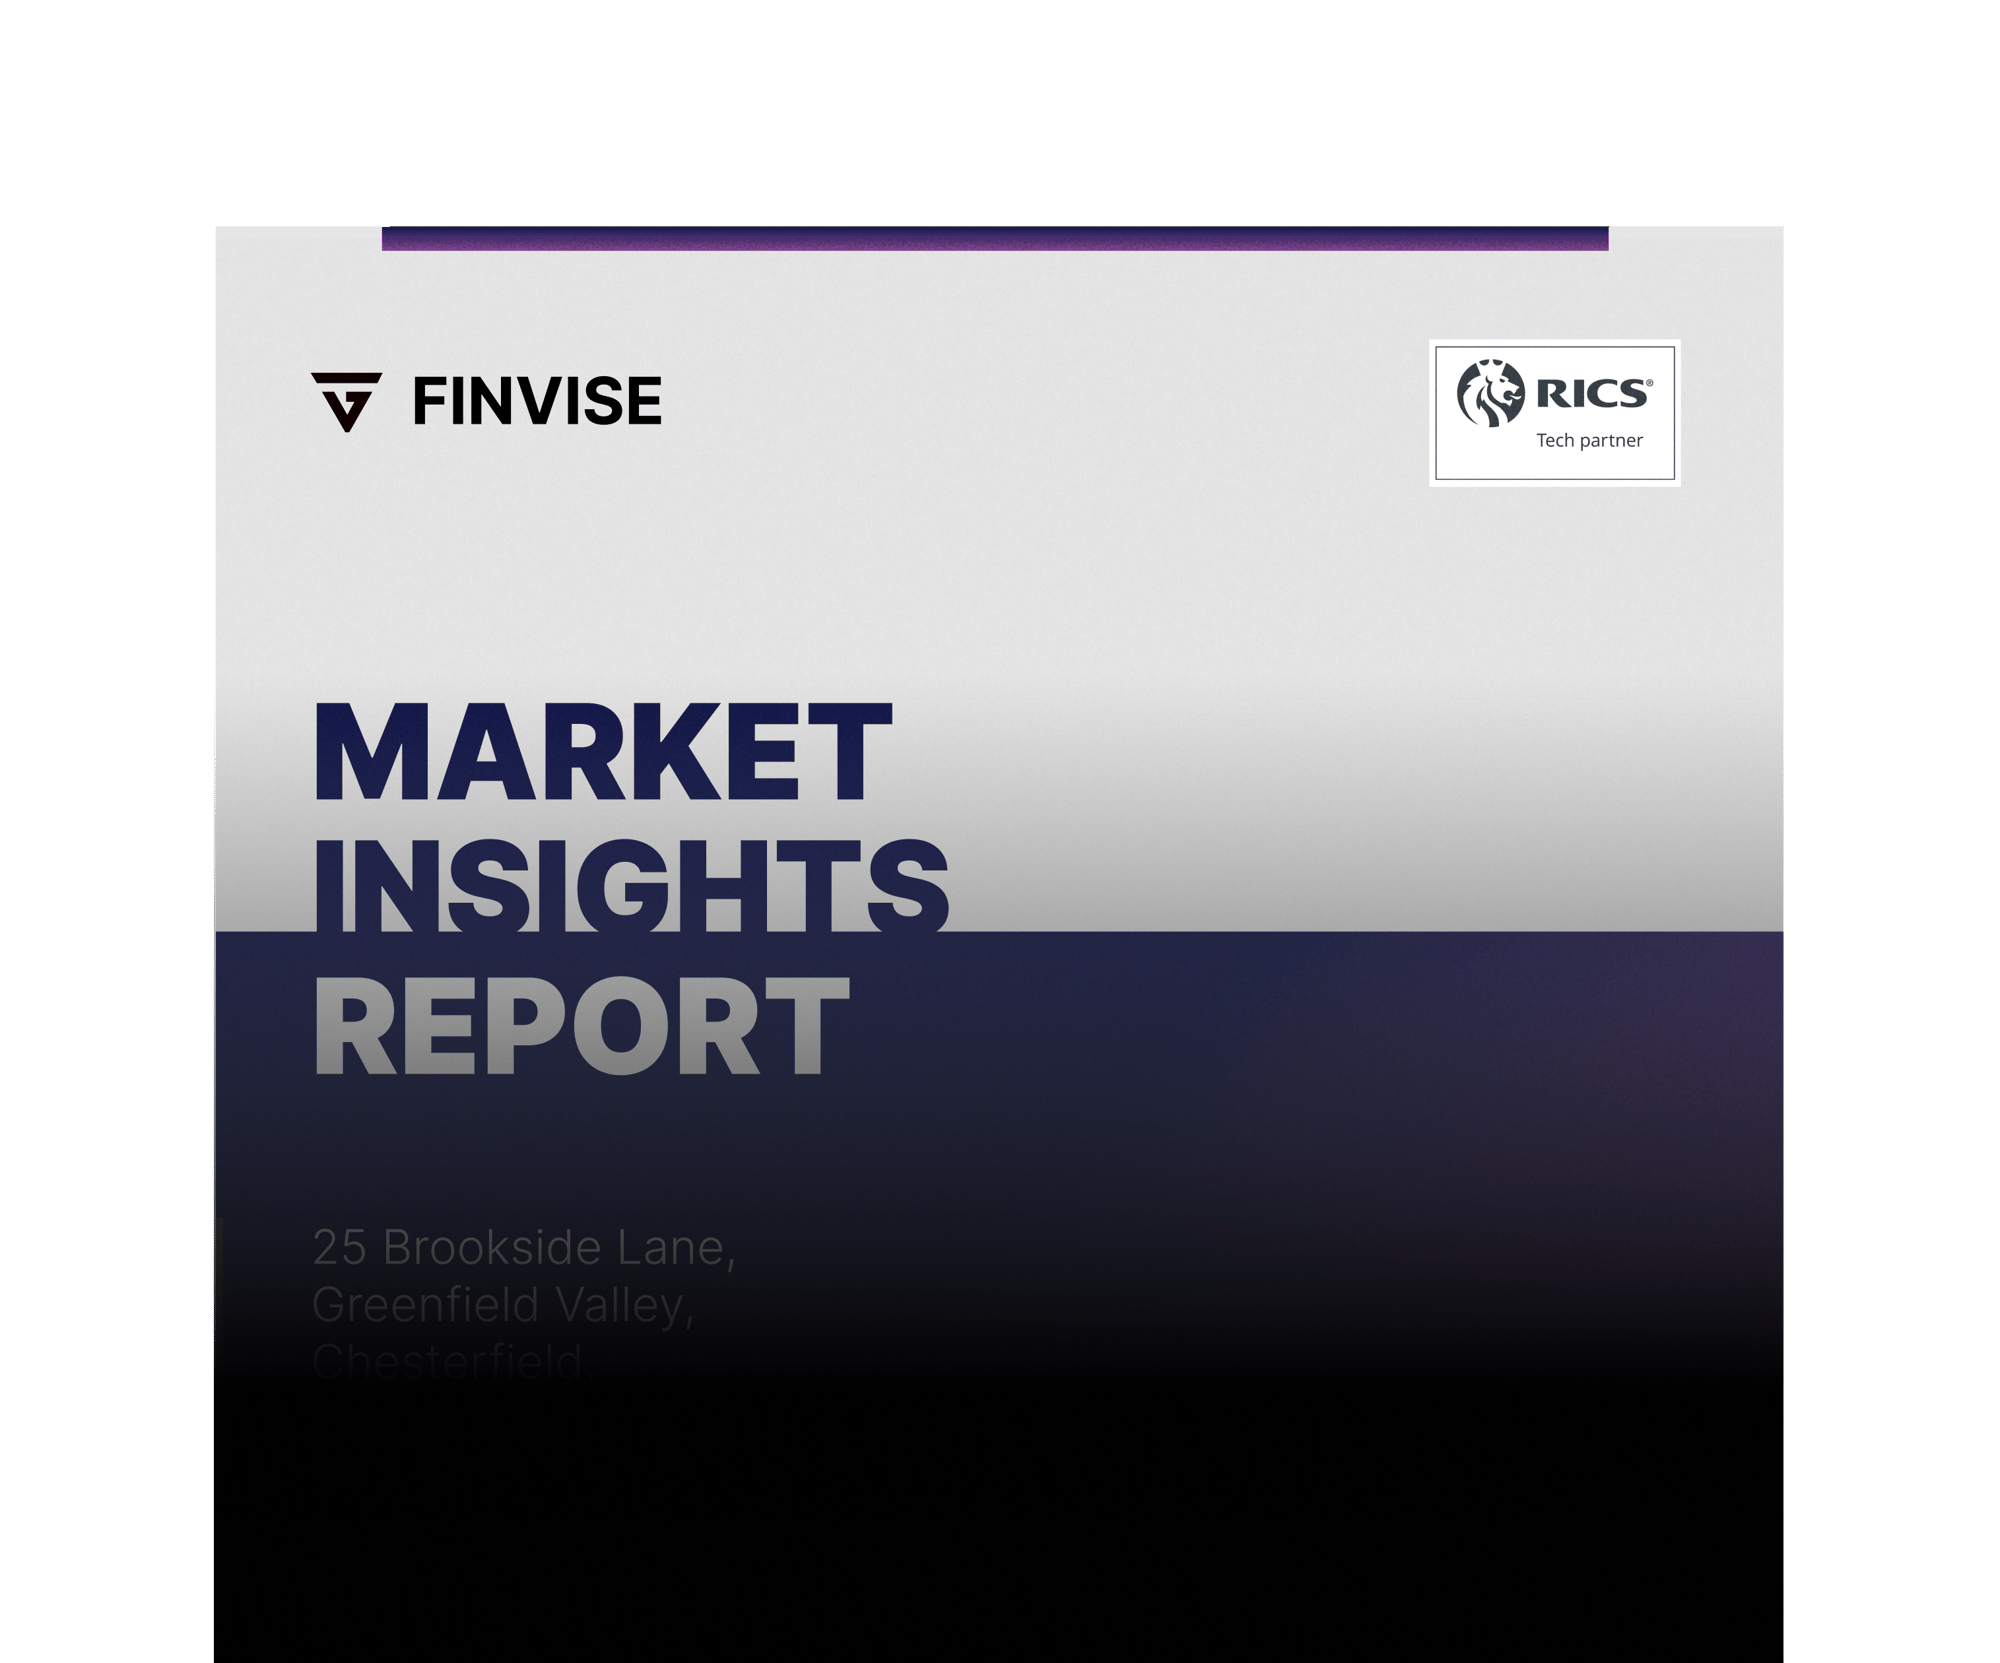 Market insights report